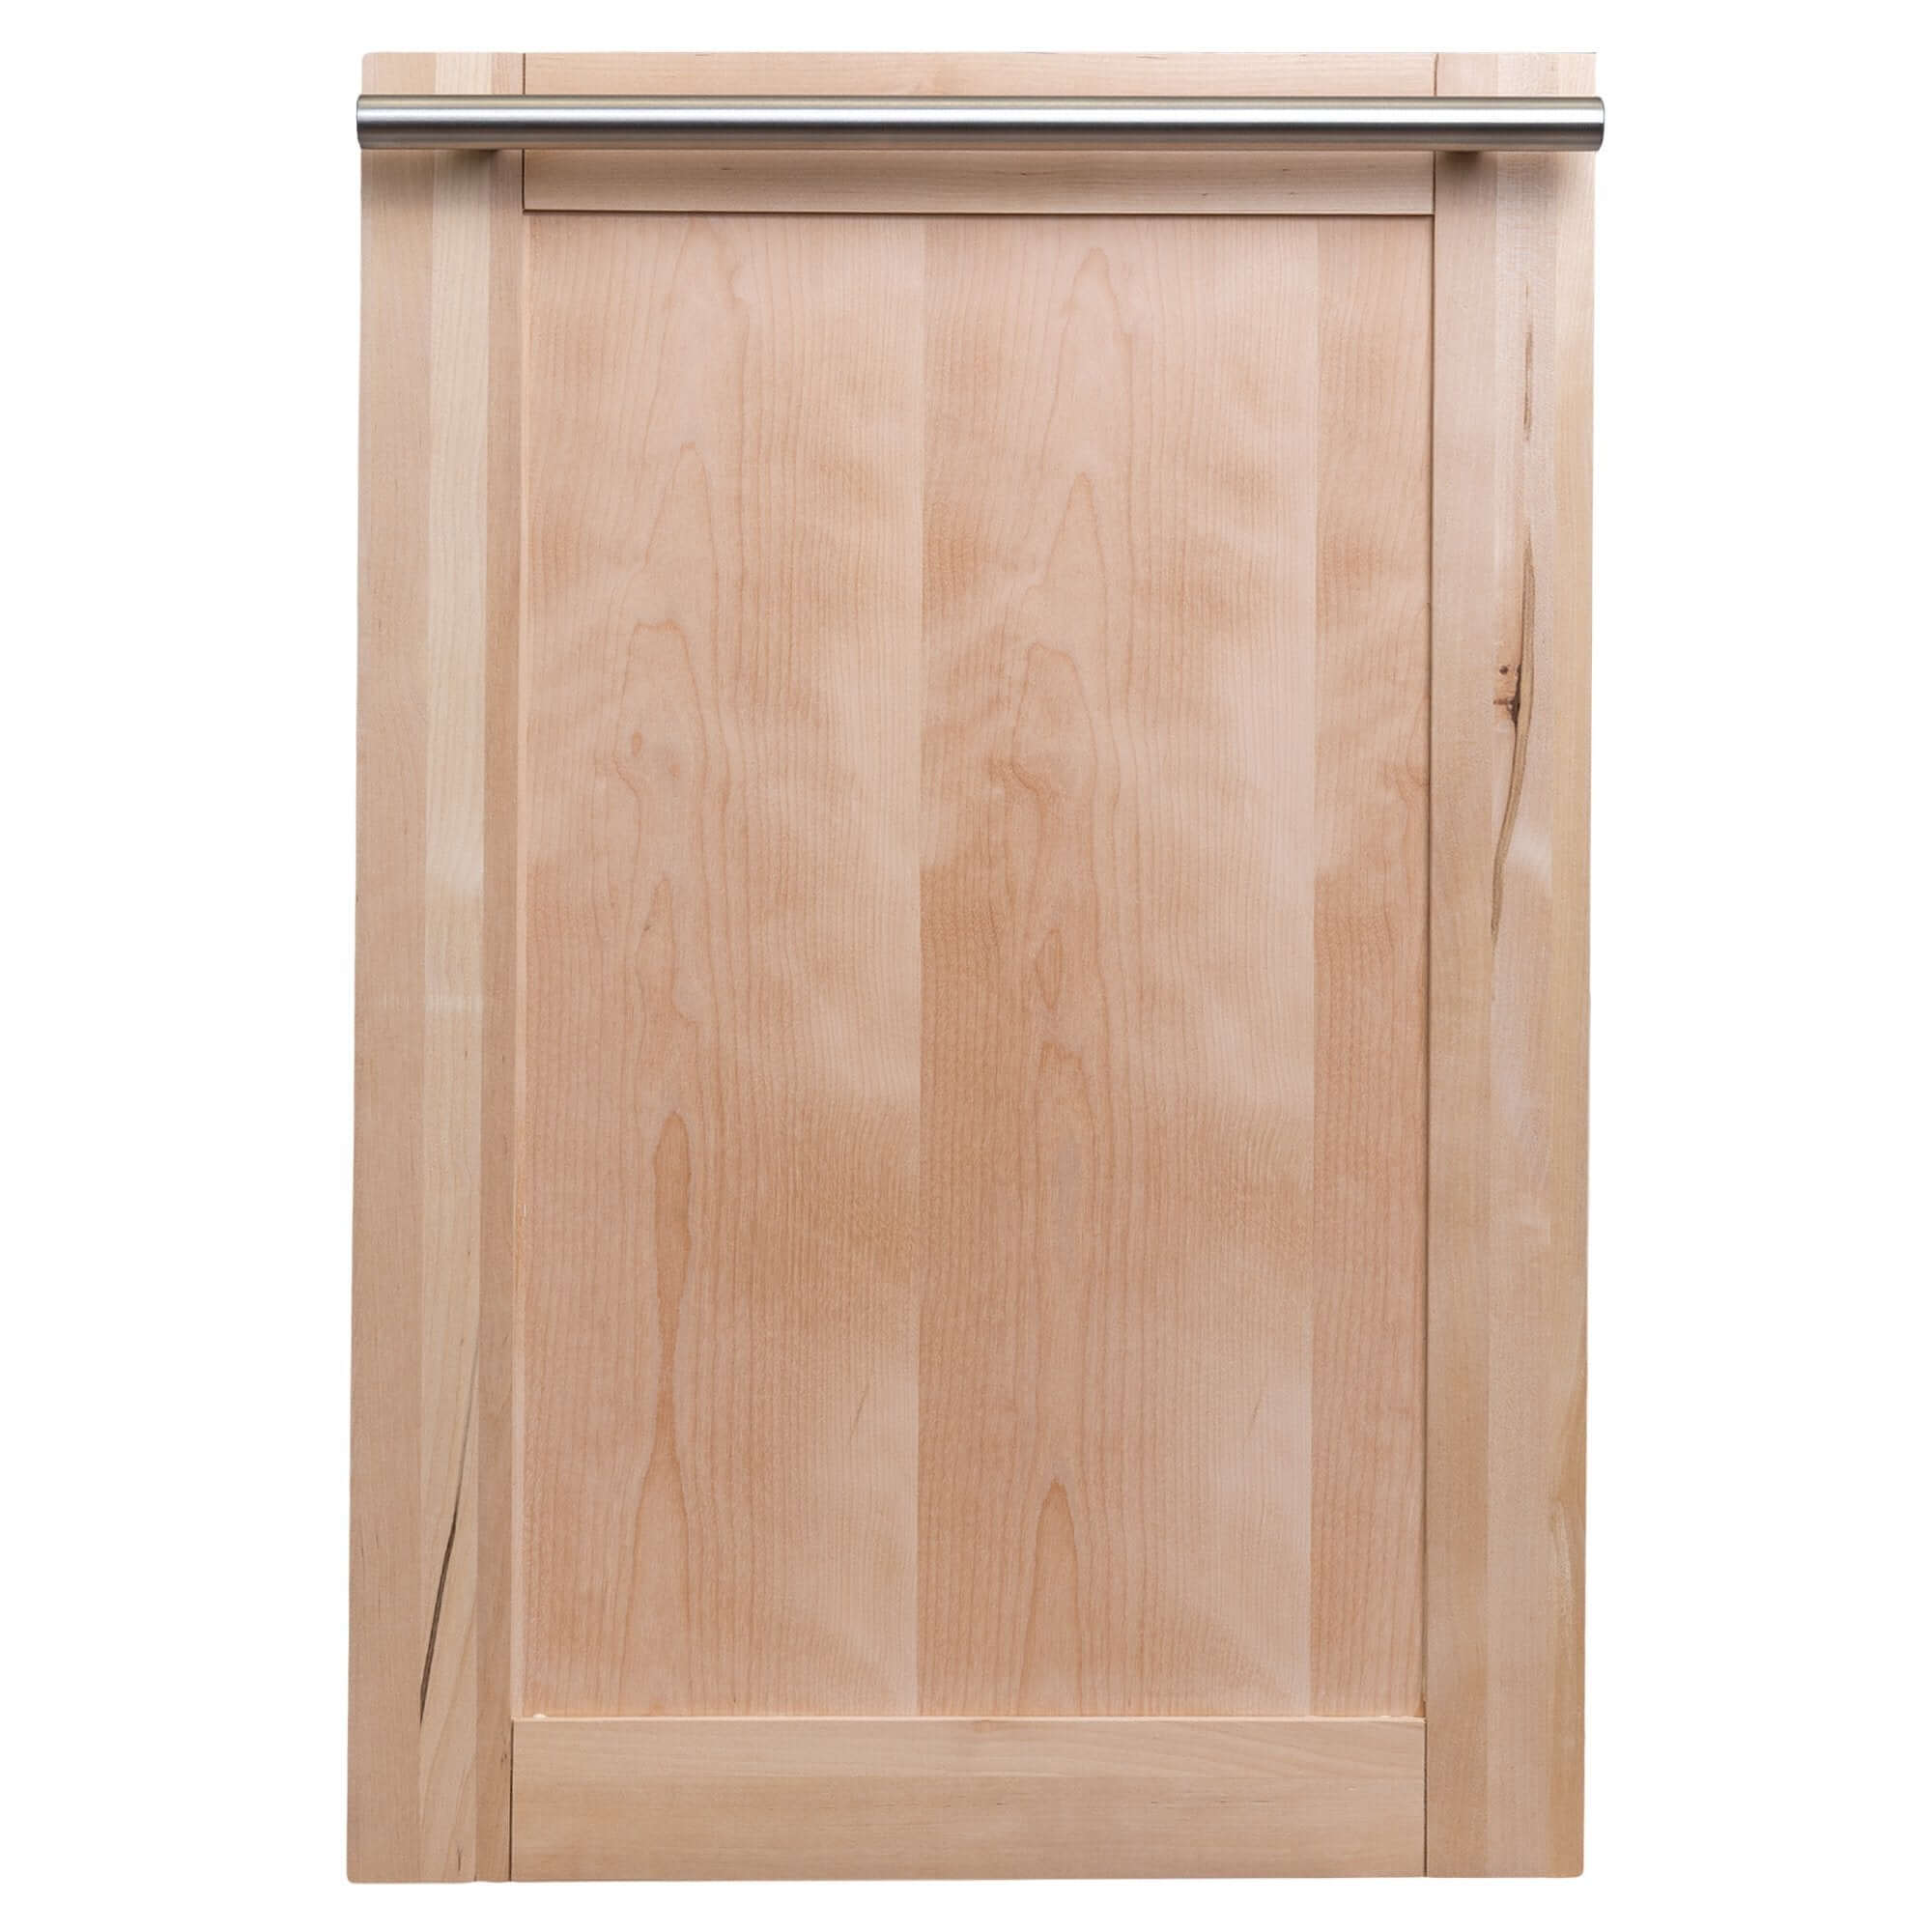 ZLINE 18" Dishwasher Panel with Modern Handle - Unfinished Wood